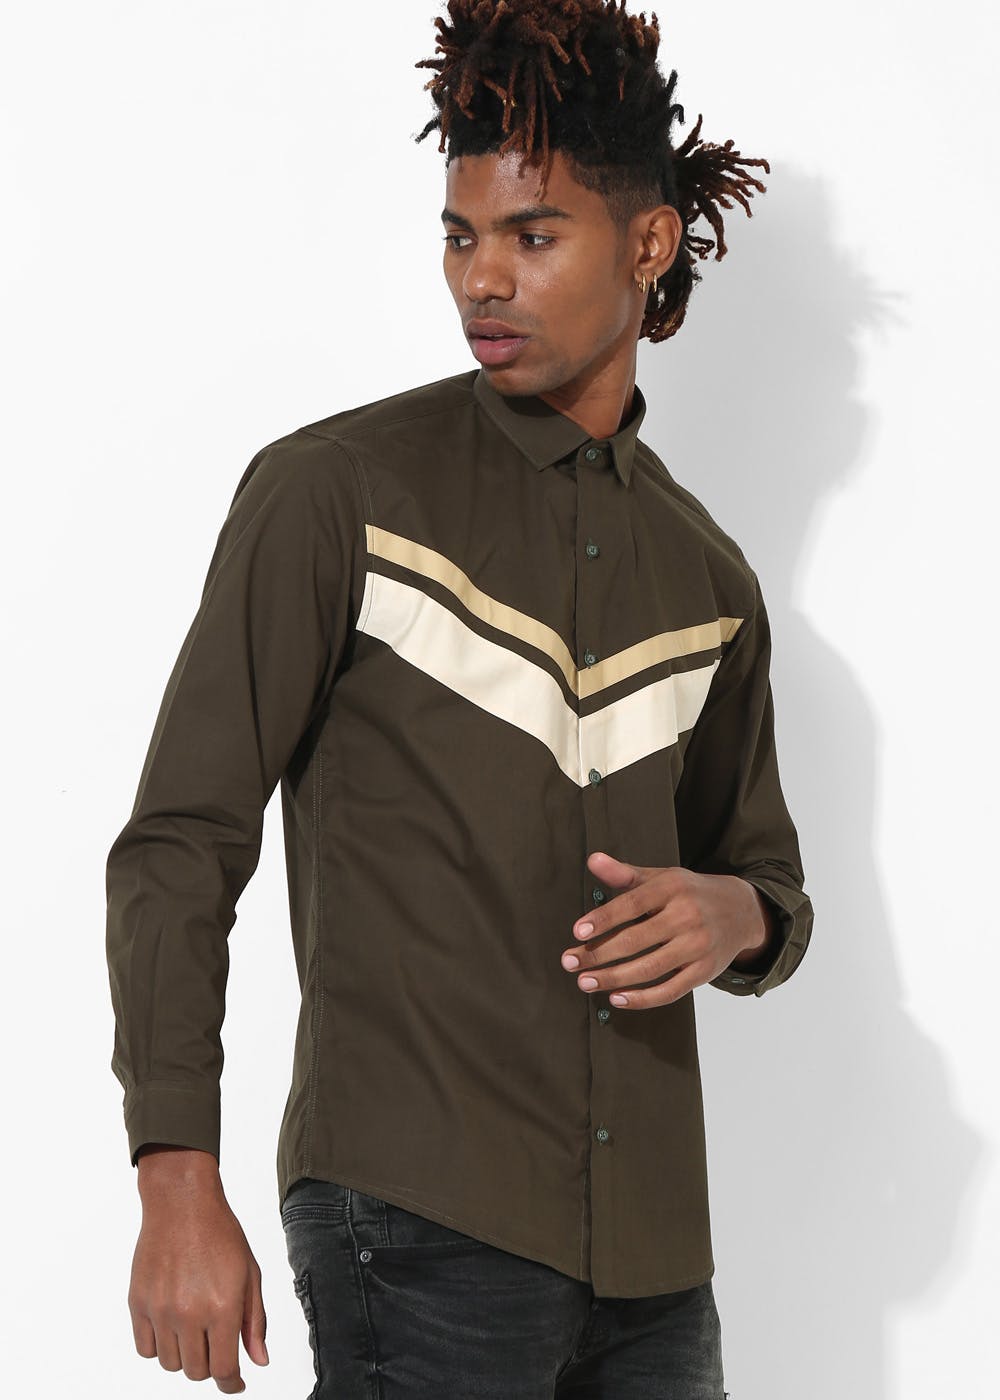 Get Two-Tone Contrast Diagonal Striped Shirt at ₹ 599 | LBB Shop